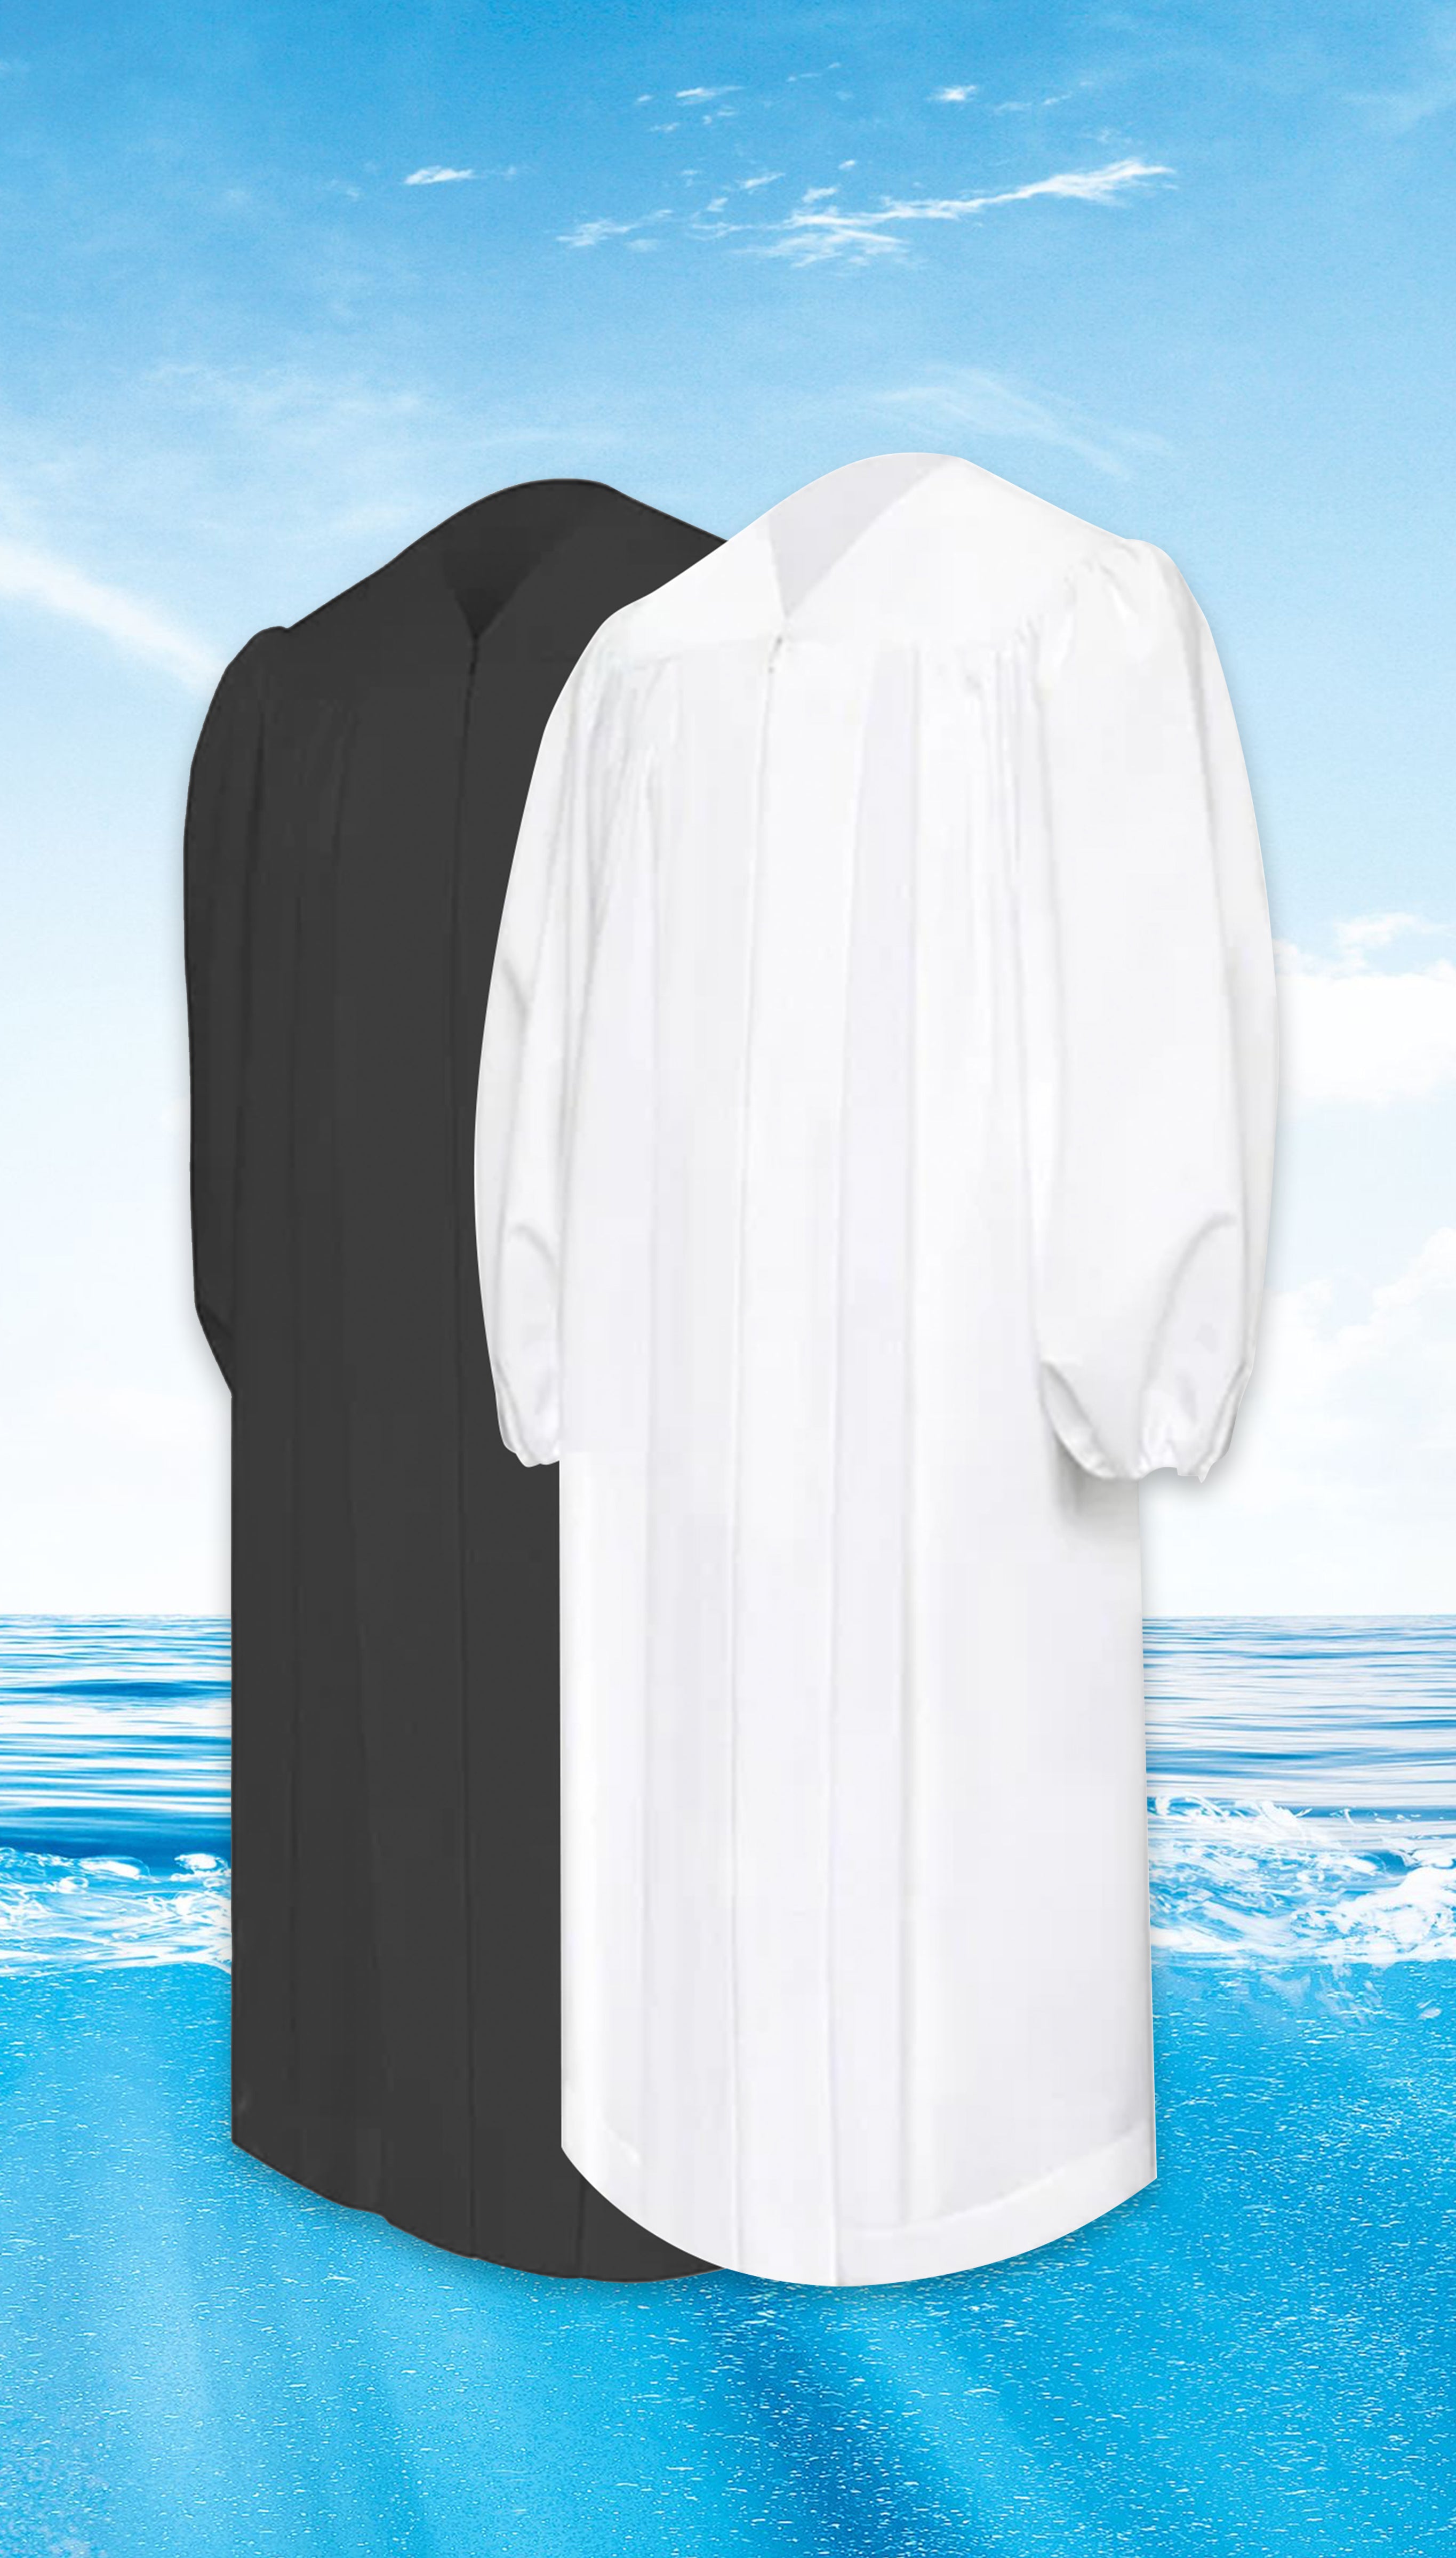 Church choir robes – PSG VESTMENTS